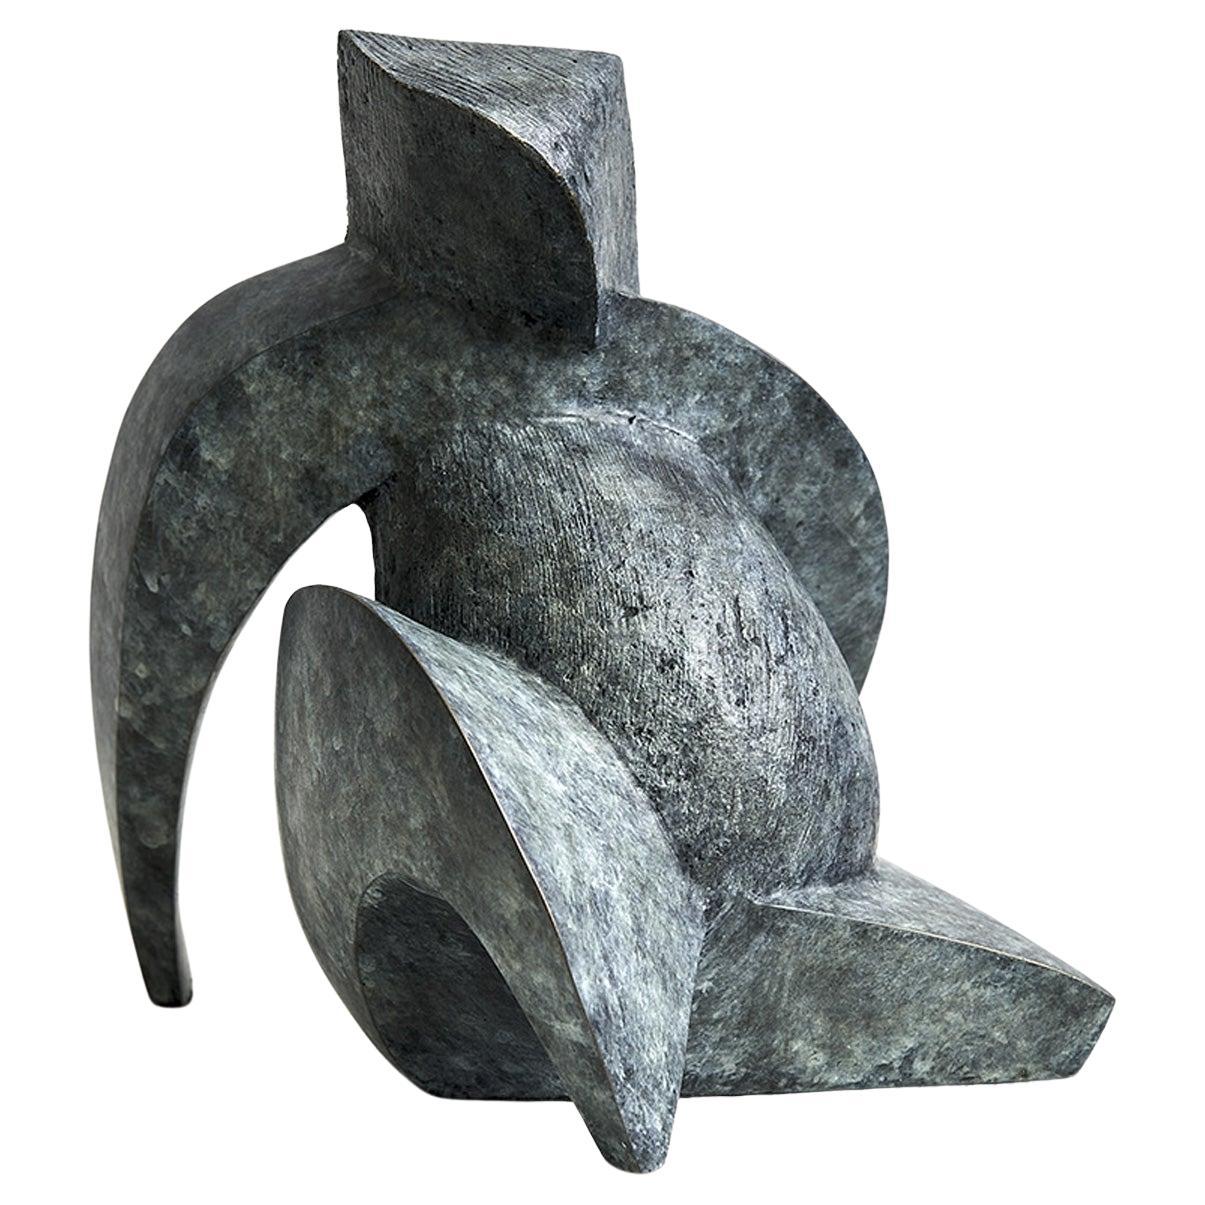 Limited Edition Latona Bronze Sculpture Figurine by Sophia Speybrouck For Sale